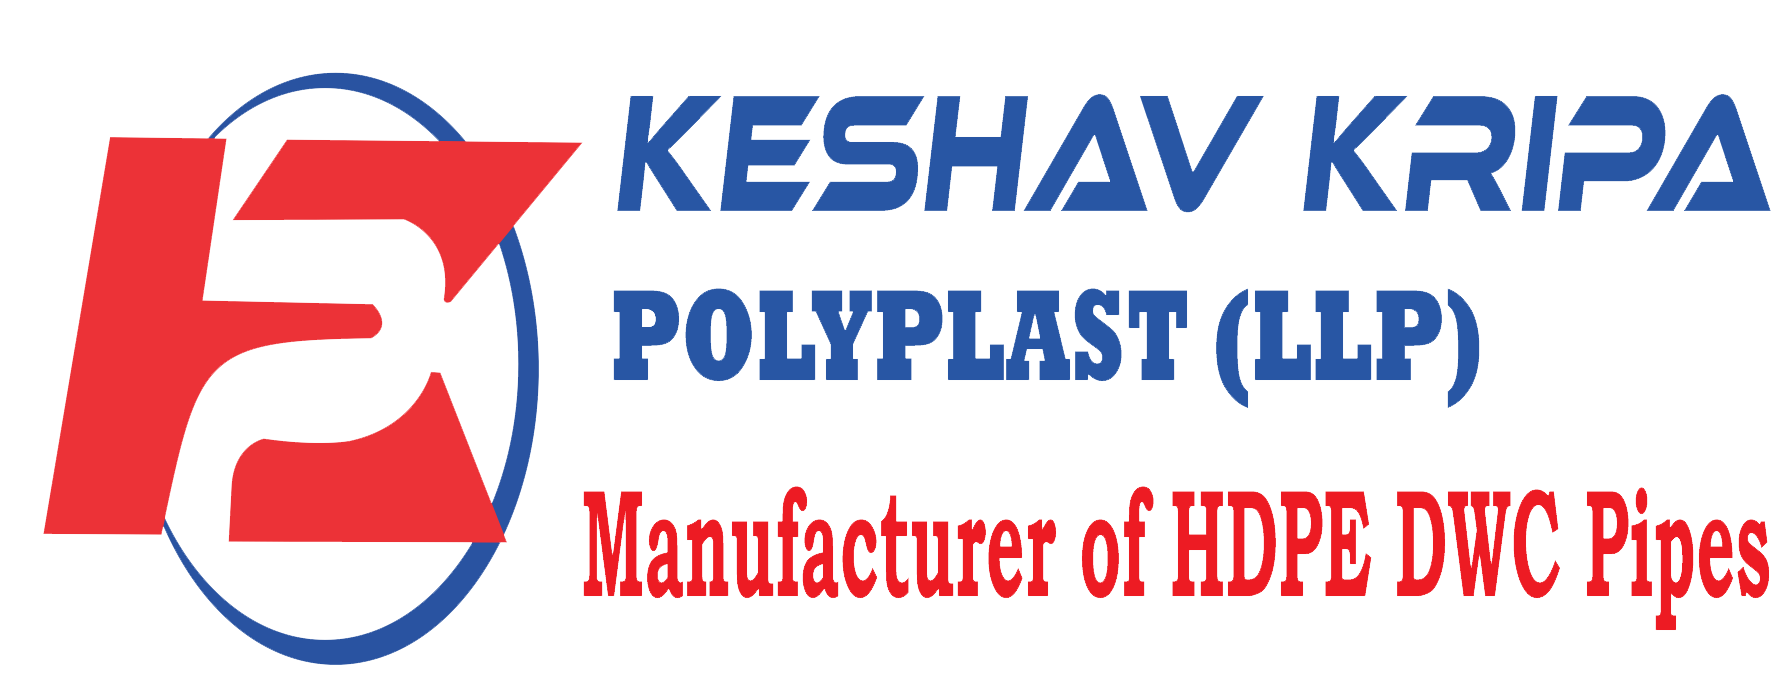 Keshav Kripa Polyplast